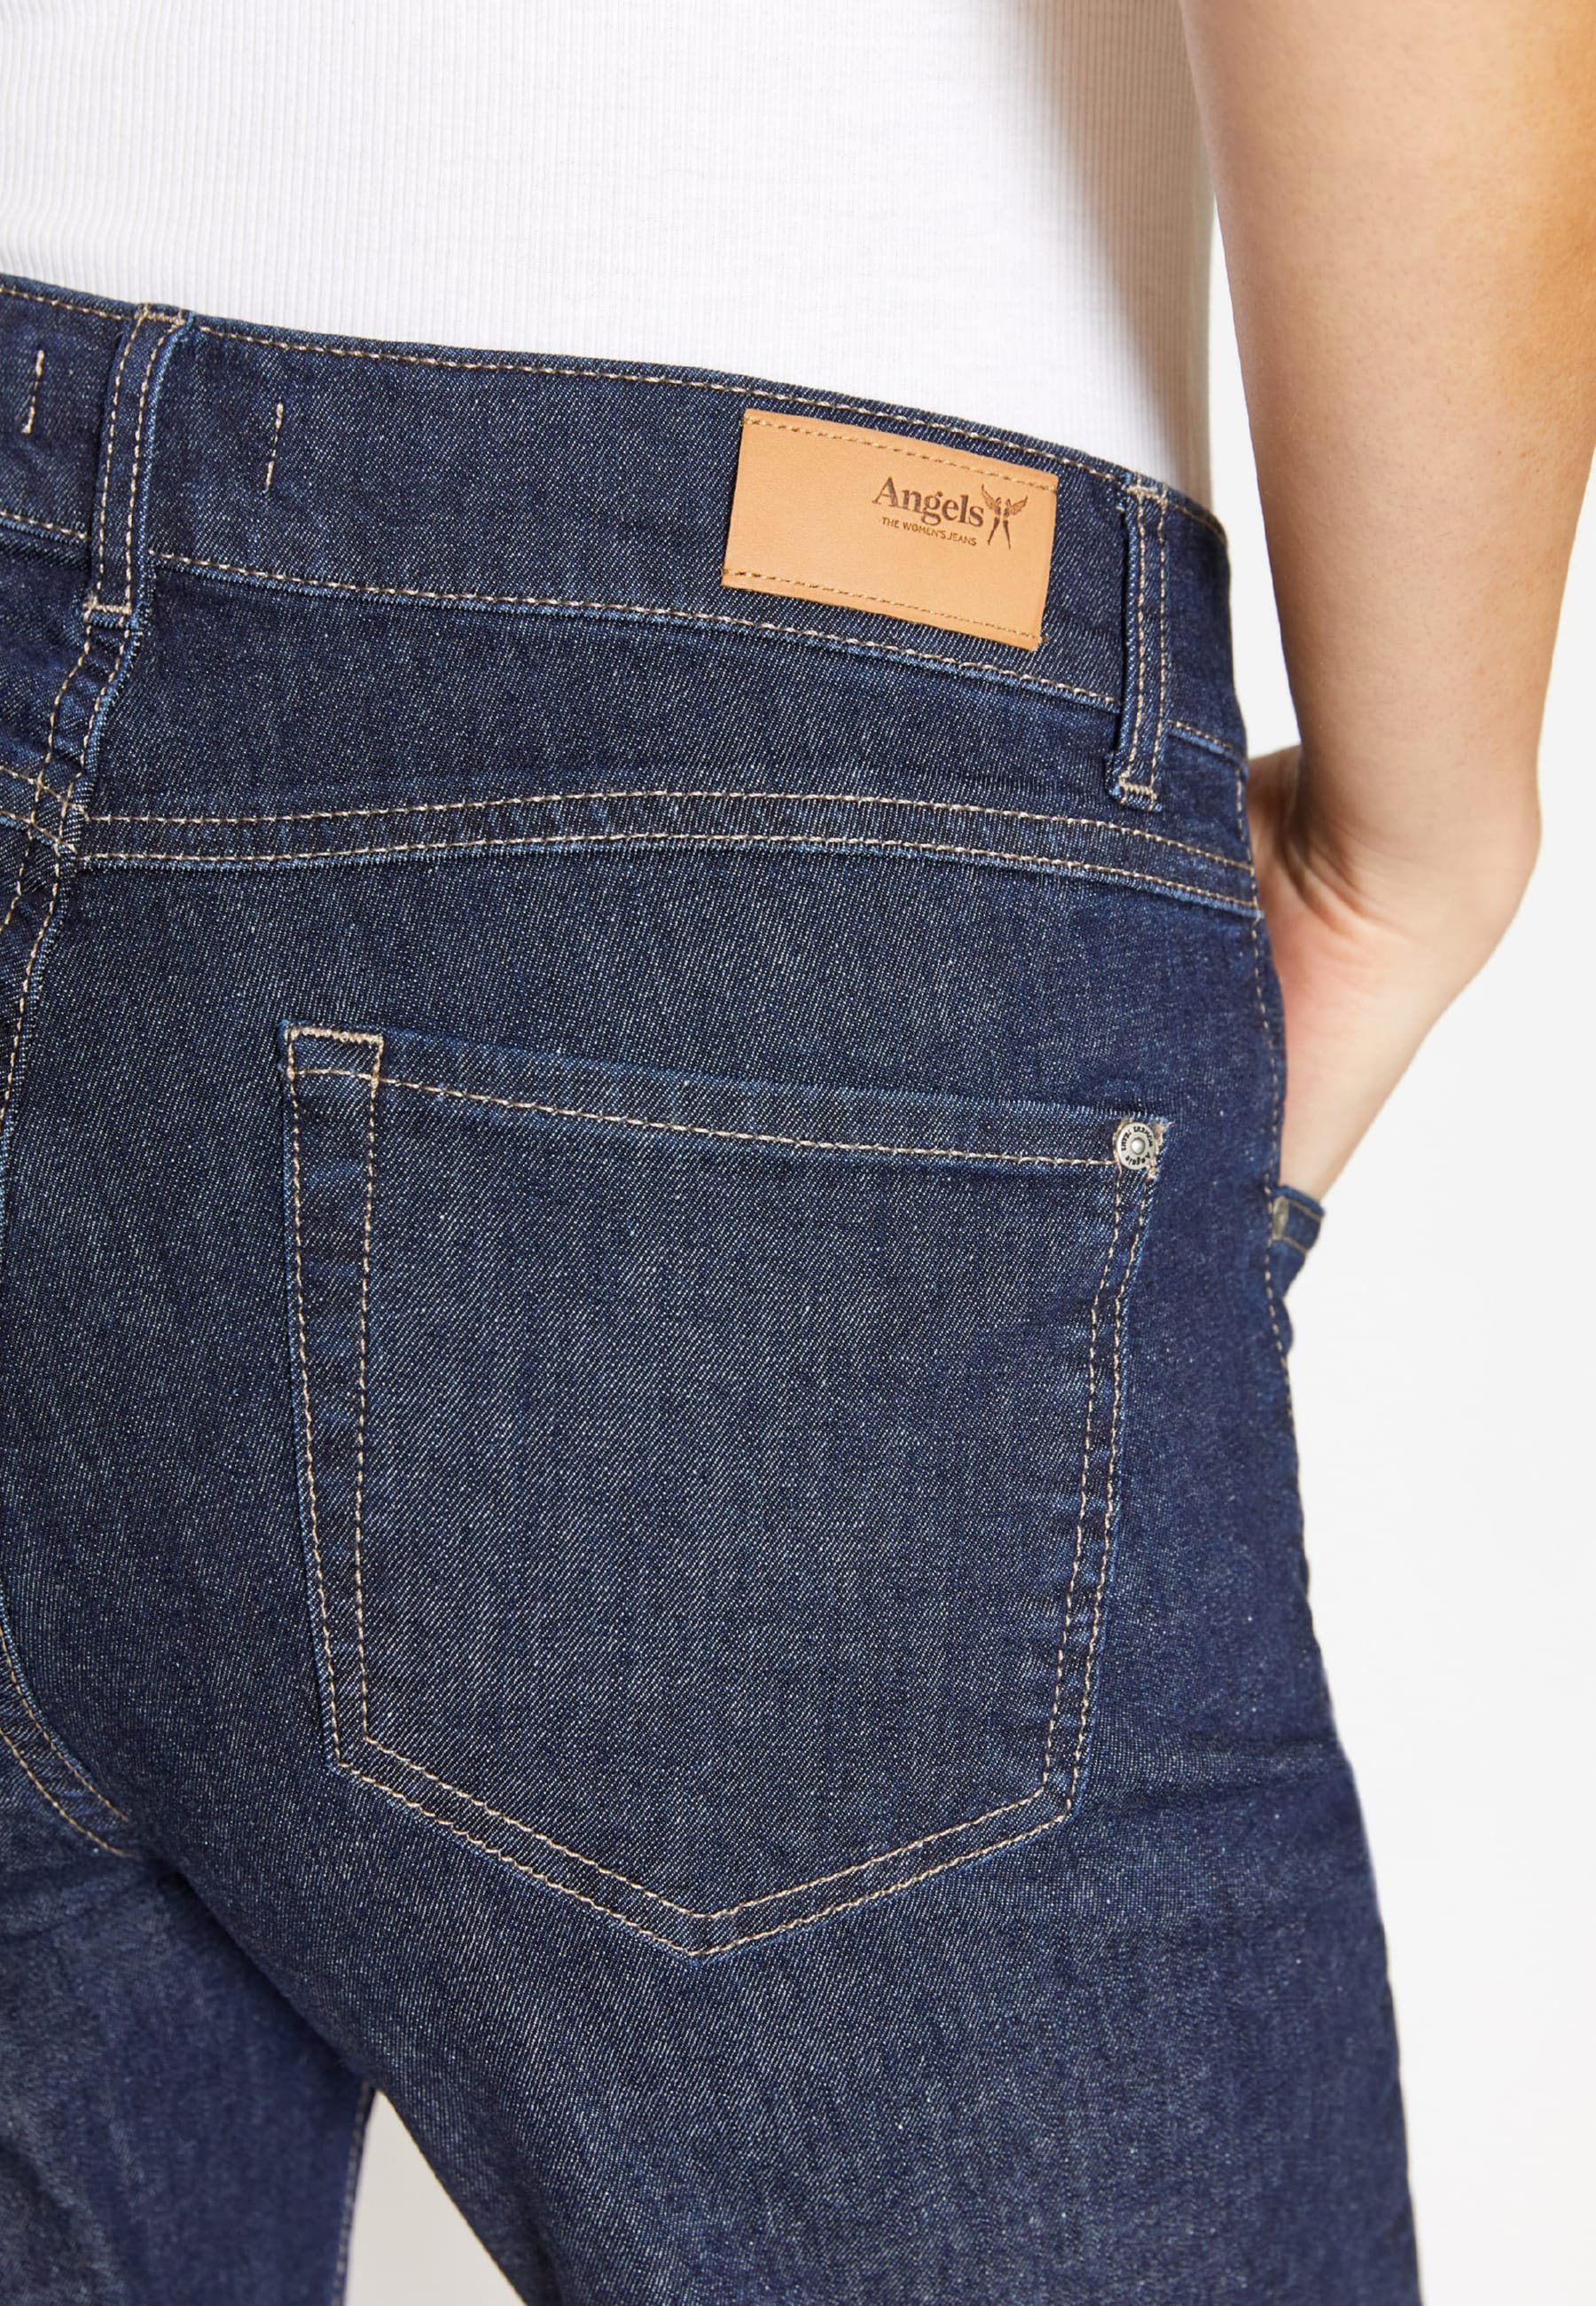 ANGELS Jeanshotpants 5-Pocket-Jeans blau Label-Applikationen Bermuda mit TU